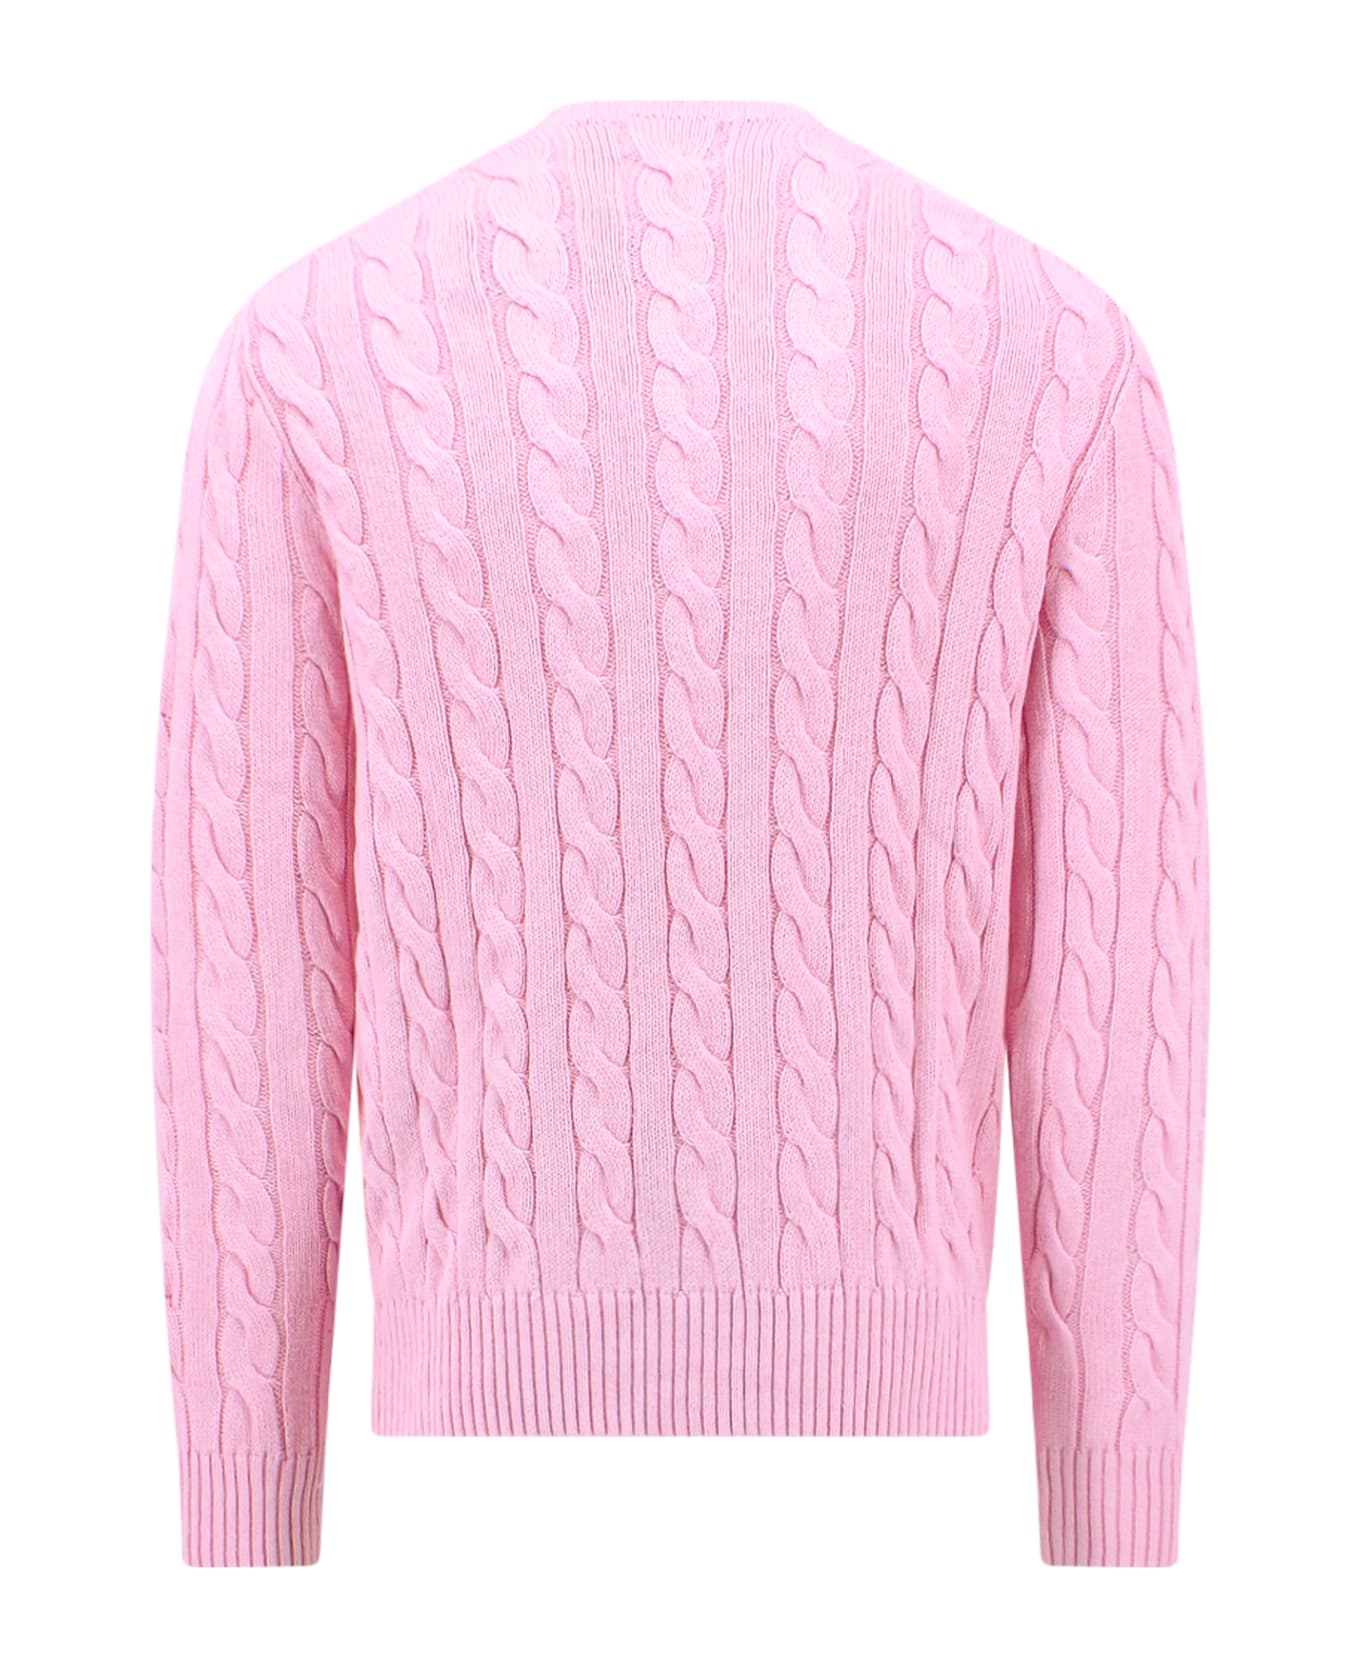 Ralph Lauren Sweater - pink